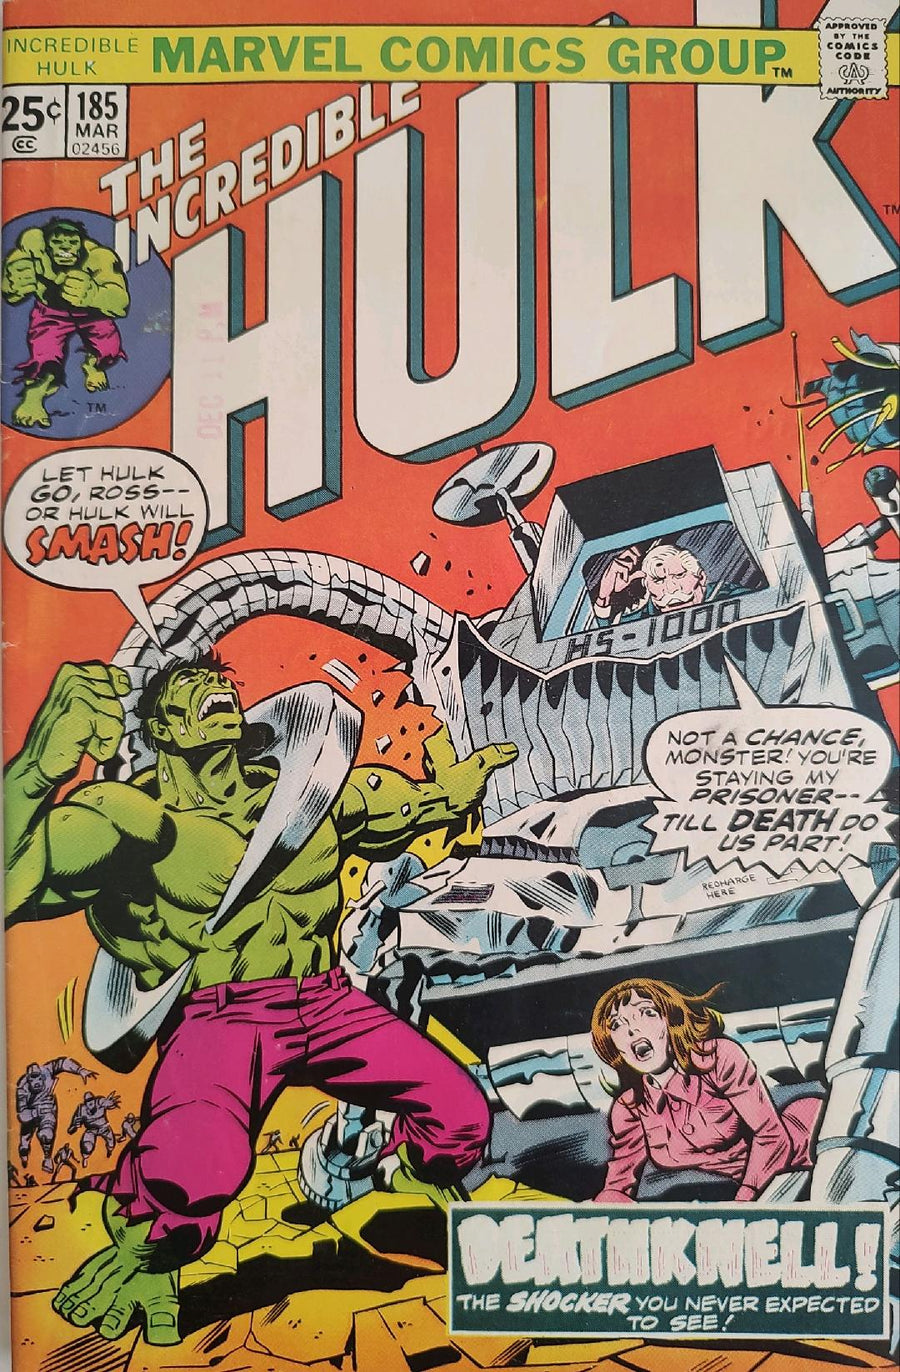 The Incredible Hulk #185 Comic Book Cover